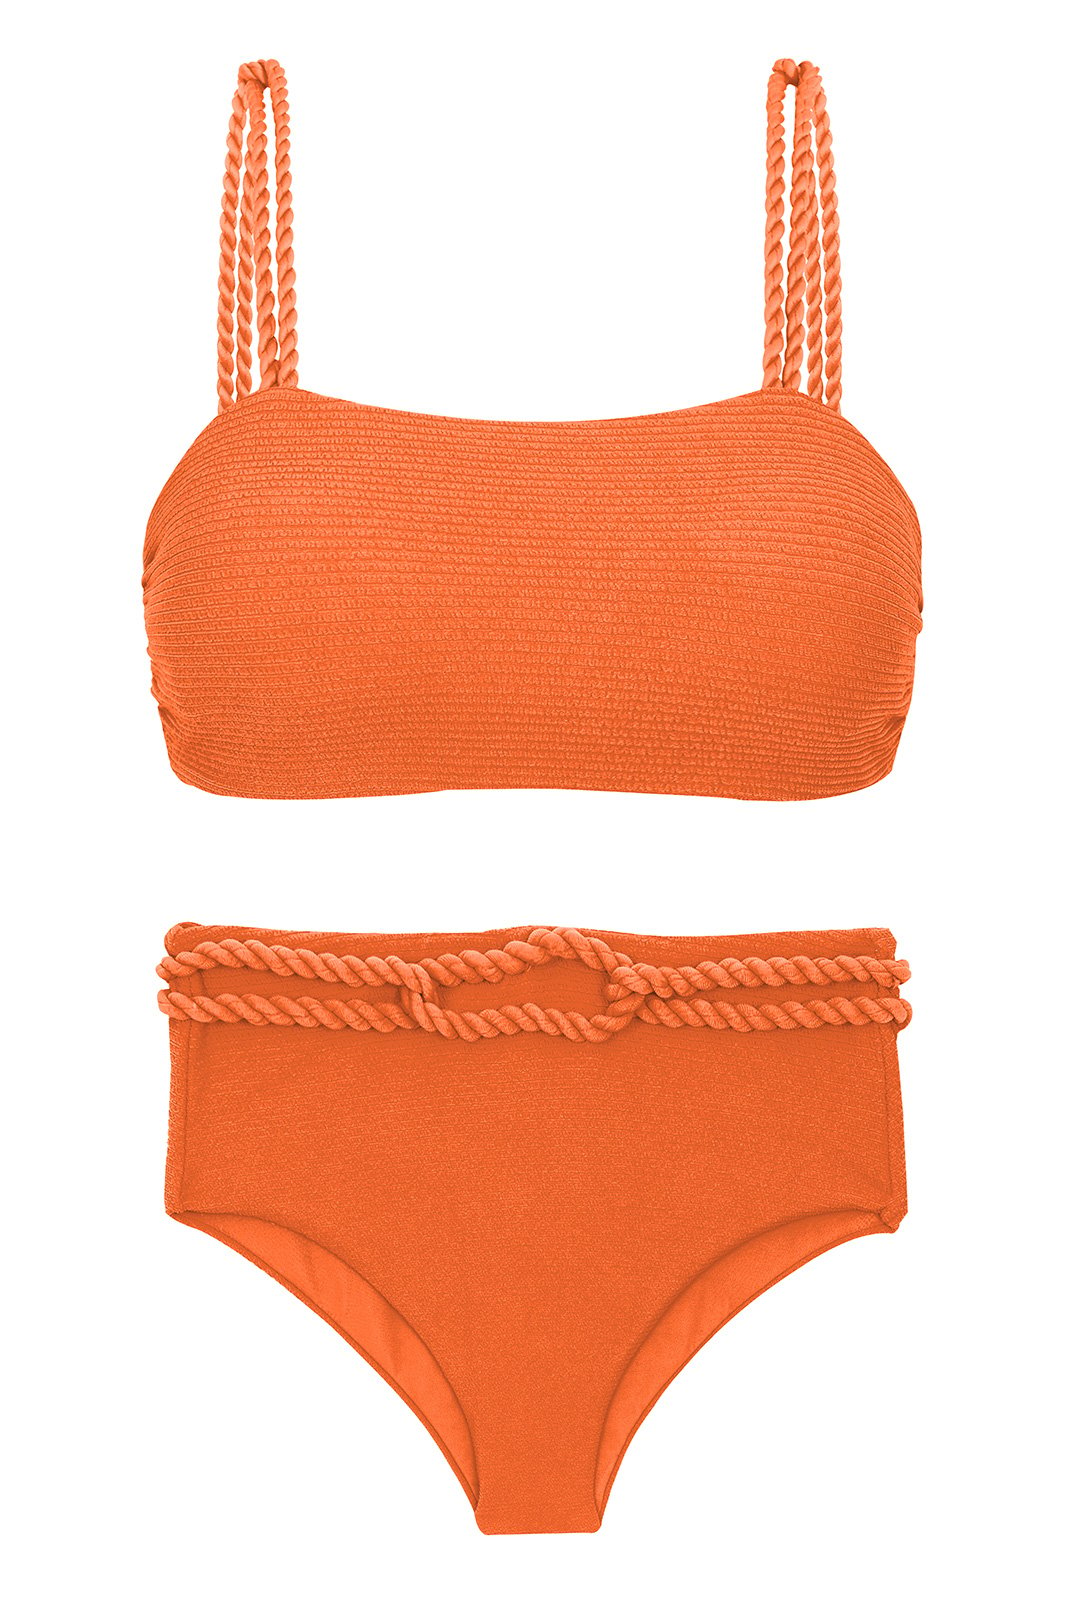 Orange Textured High Waist Bikini With Twisted Rope - St-tropez-tangerina Reto Hotpant-high - Rio de Sol